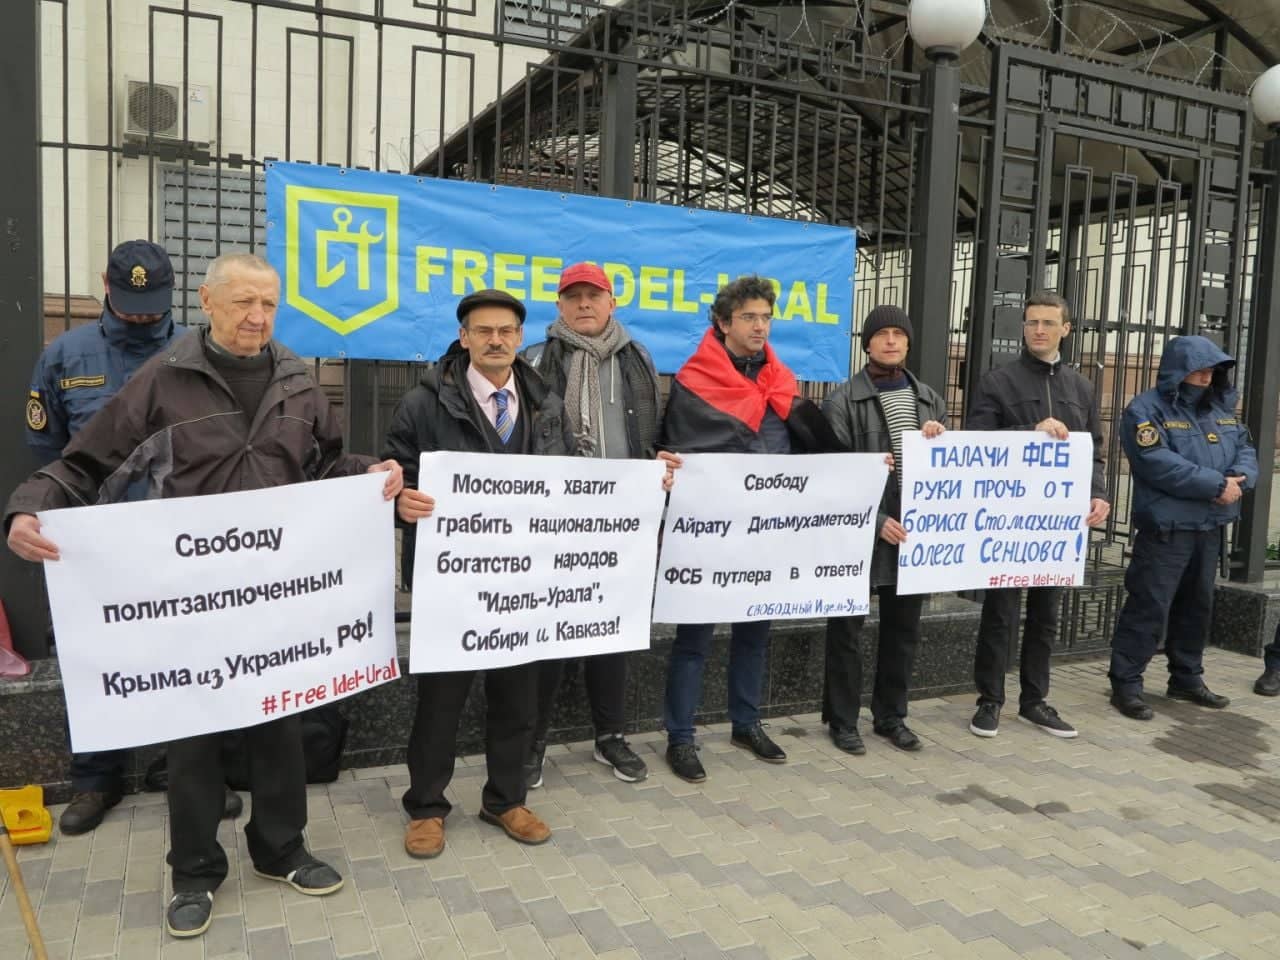 Activists demand Russia to free Airat Dilmukhametov